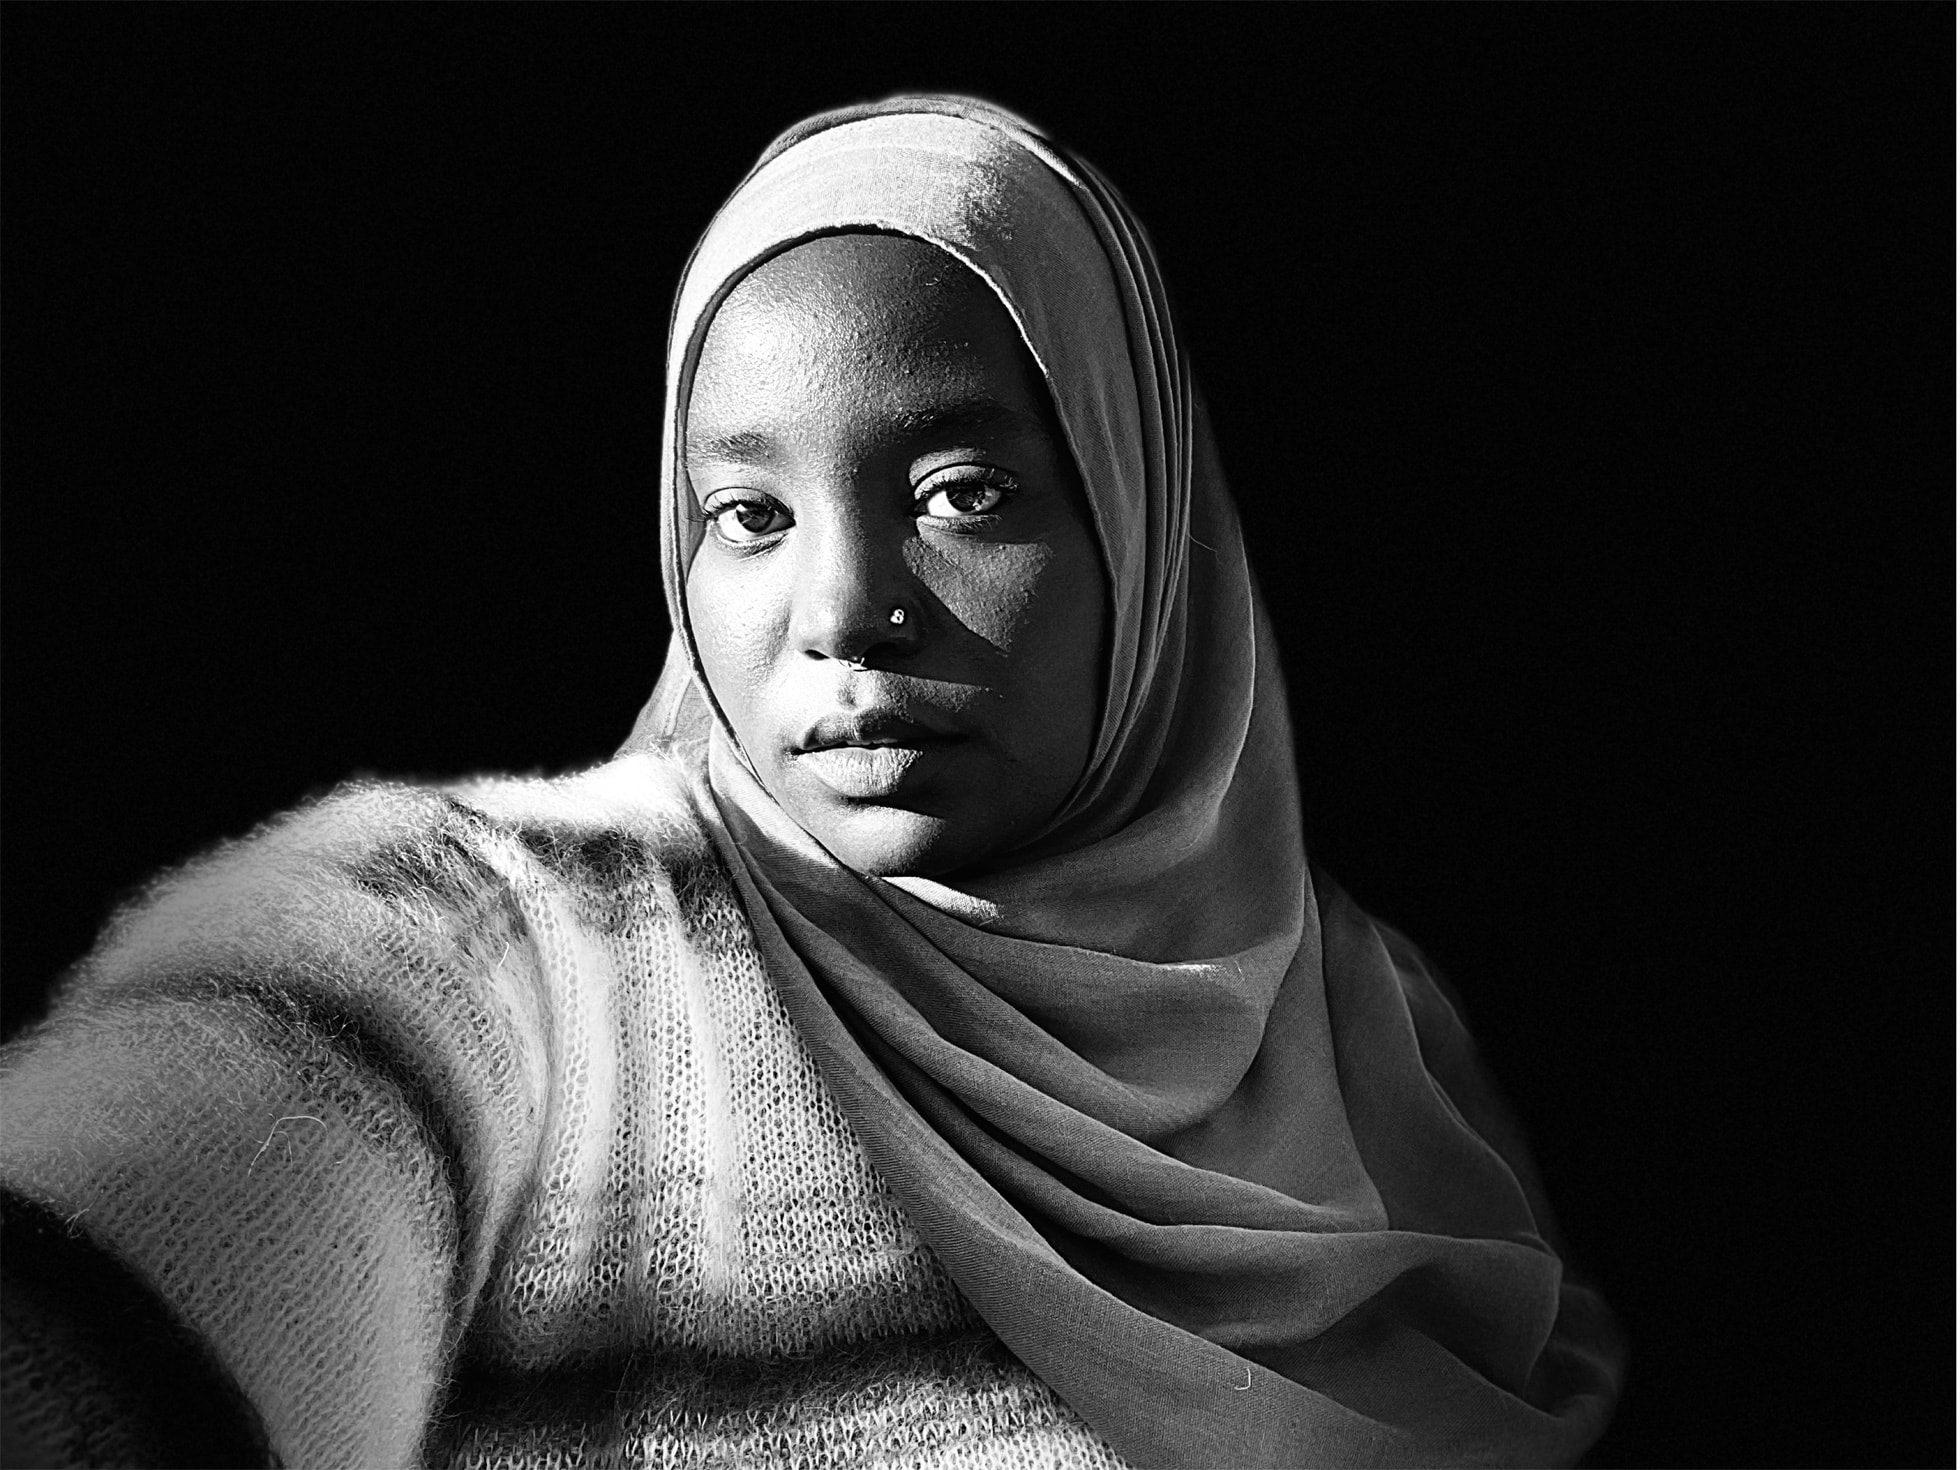 Potret wanita hitam dan putih, diambil dengan mod potret pada iPhone SE